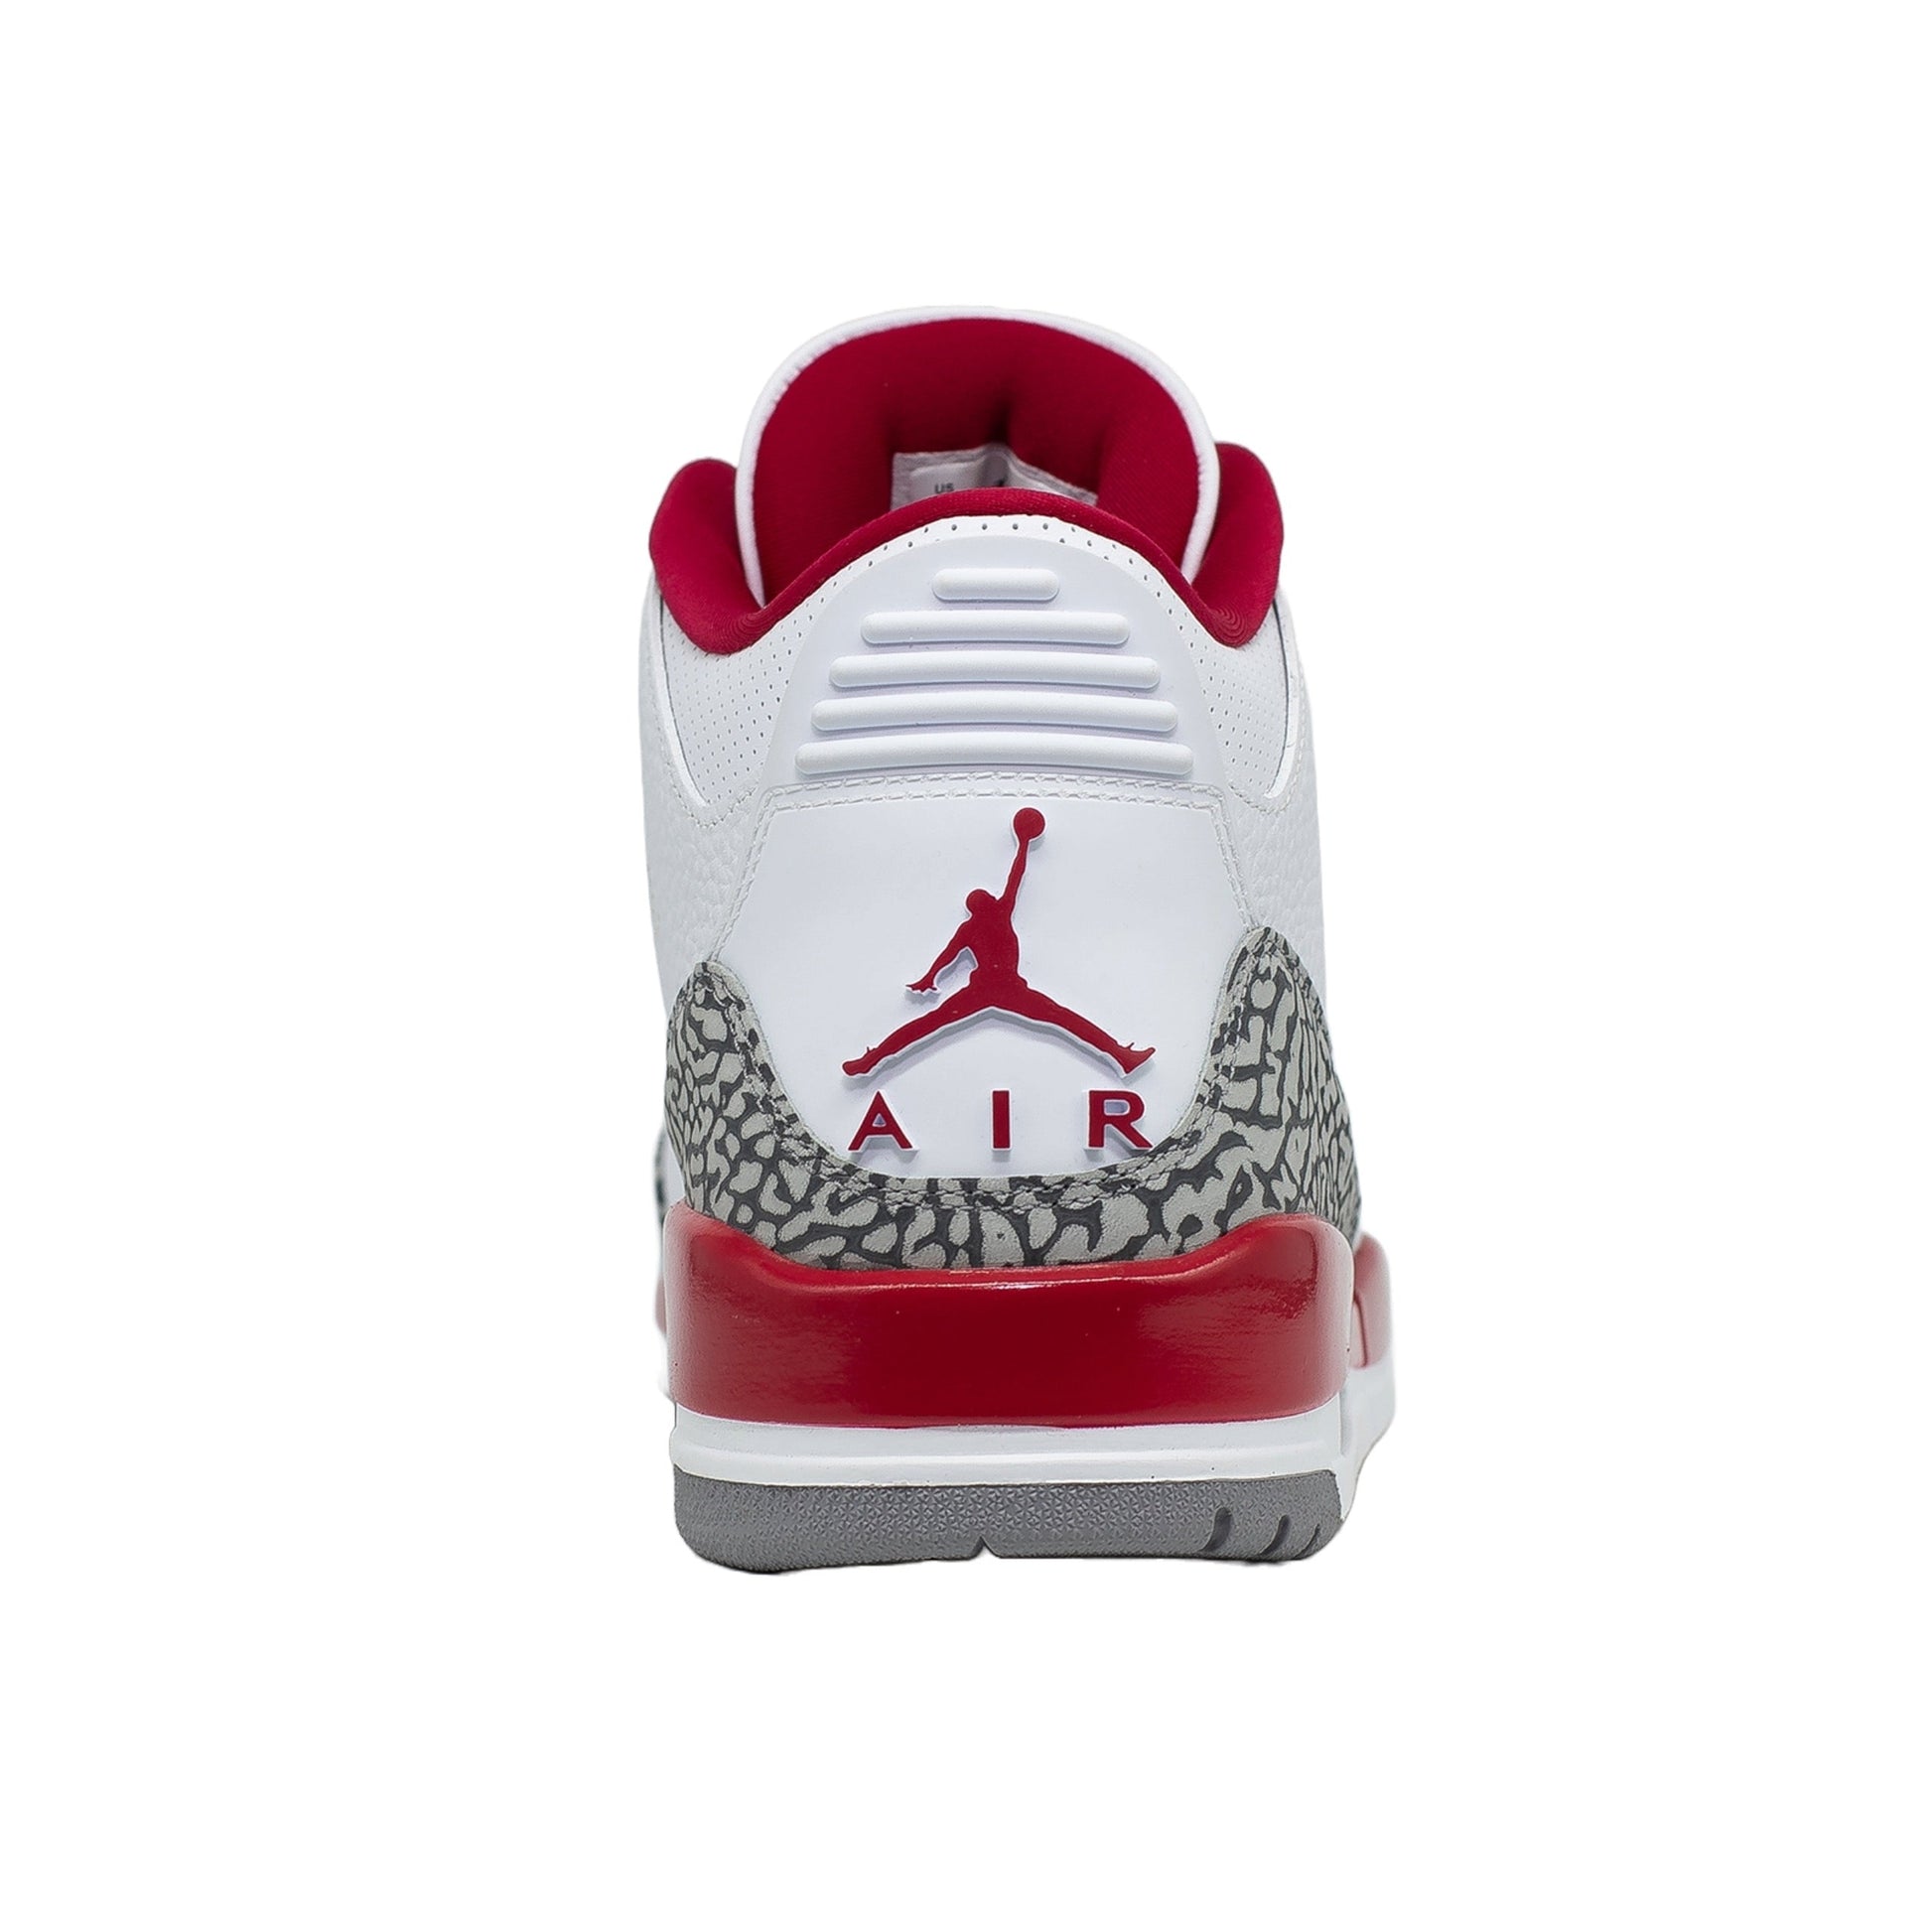 Air Jordan 3, Cardinal Red